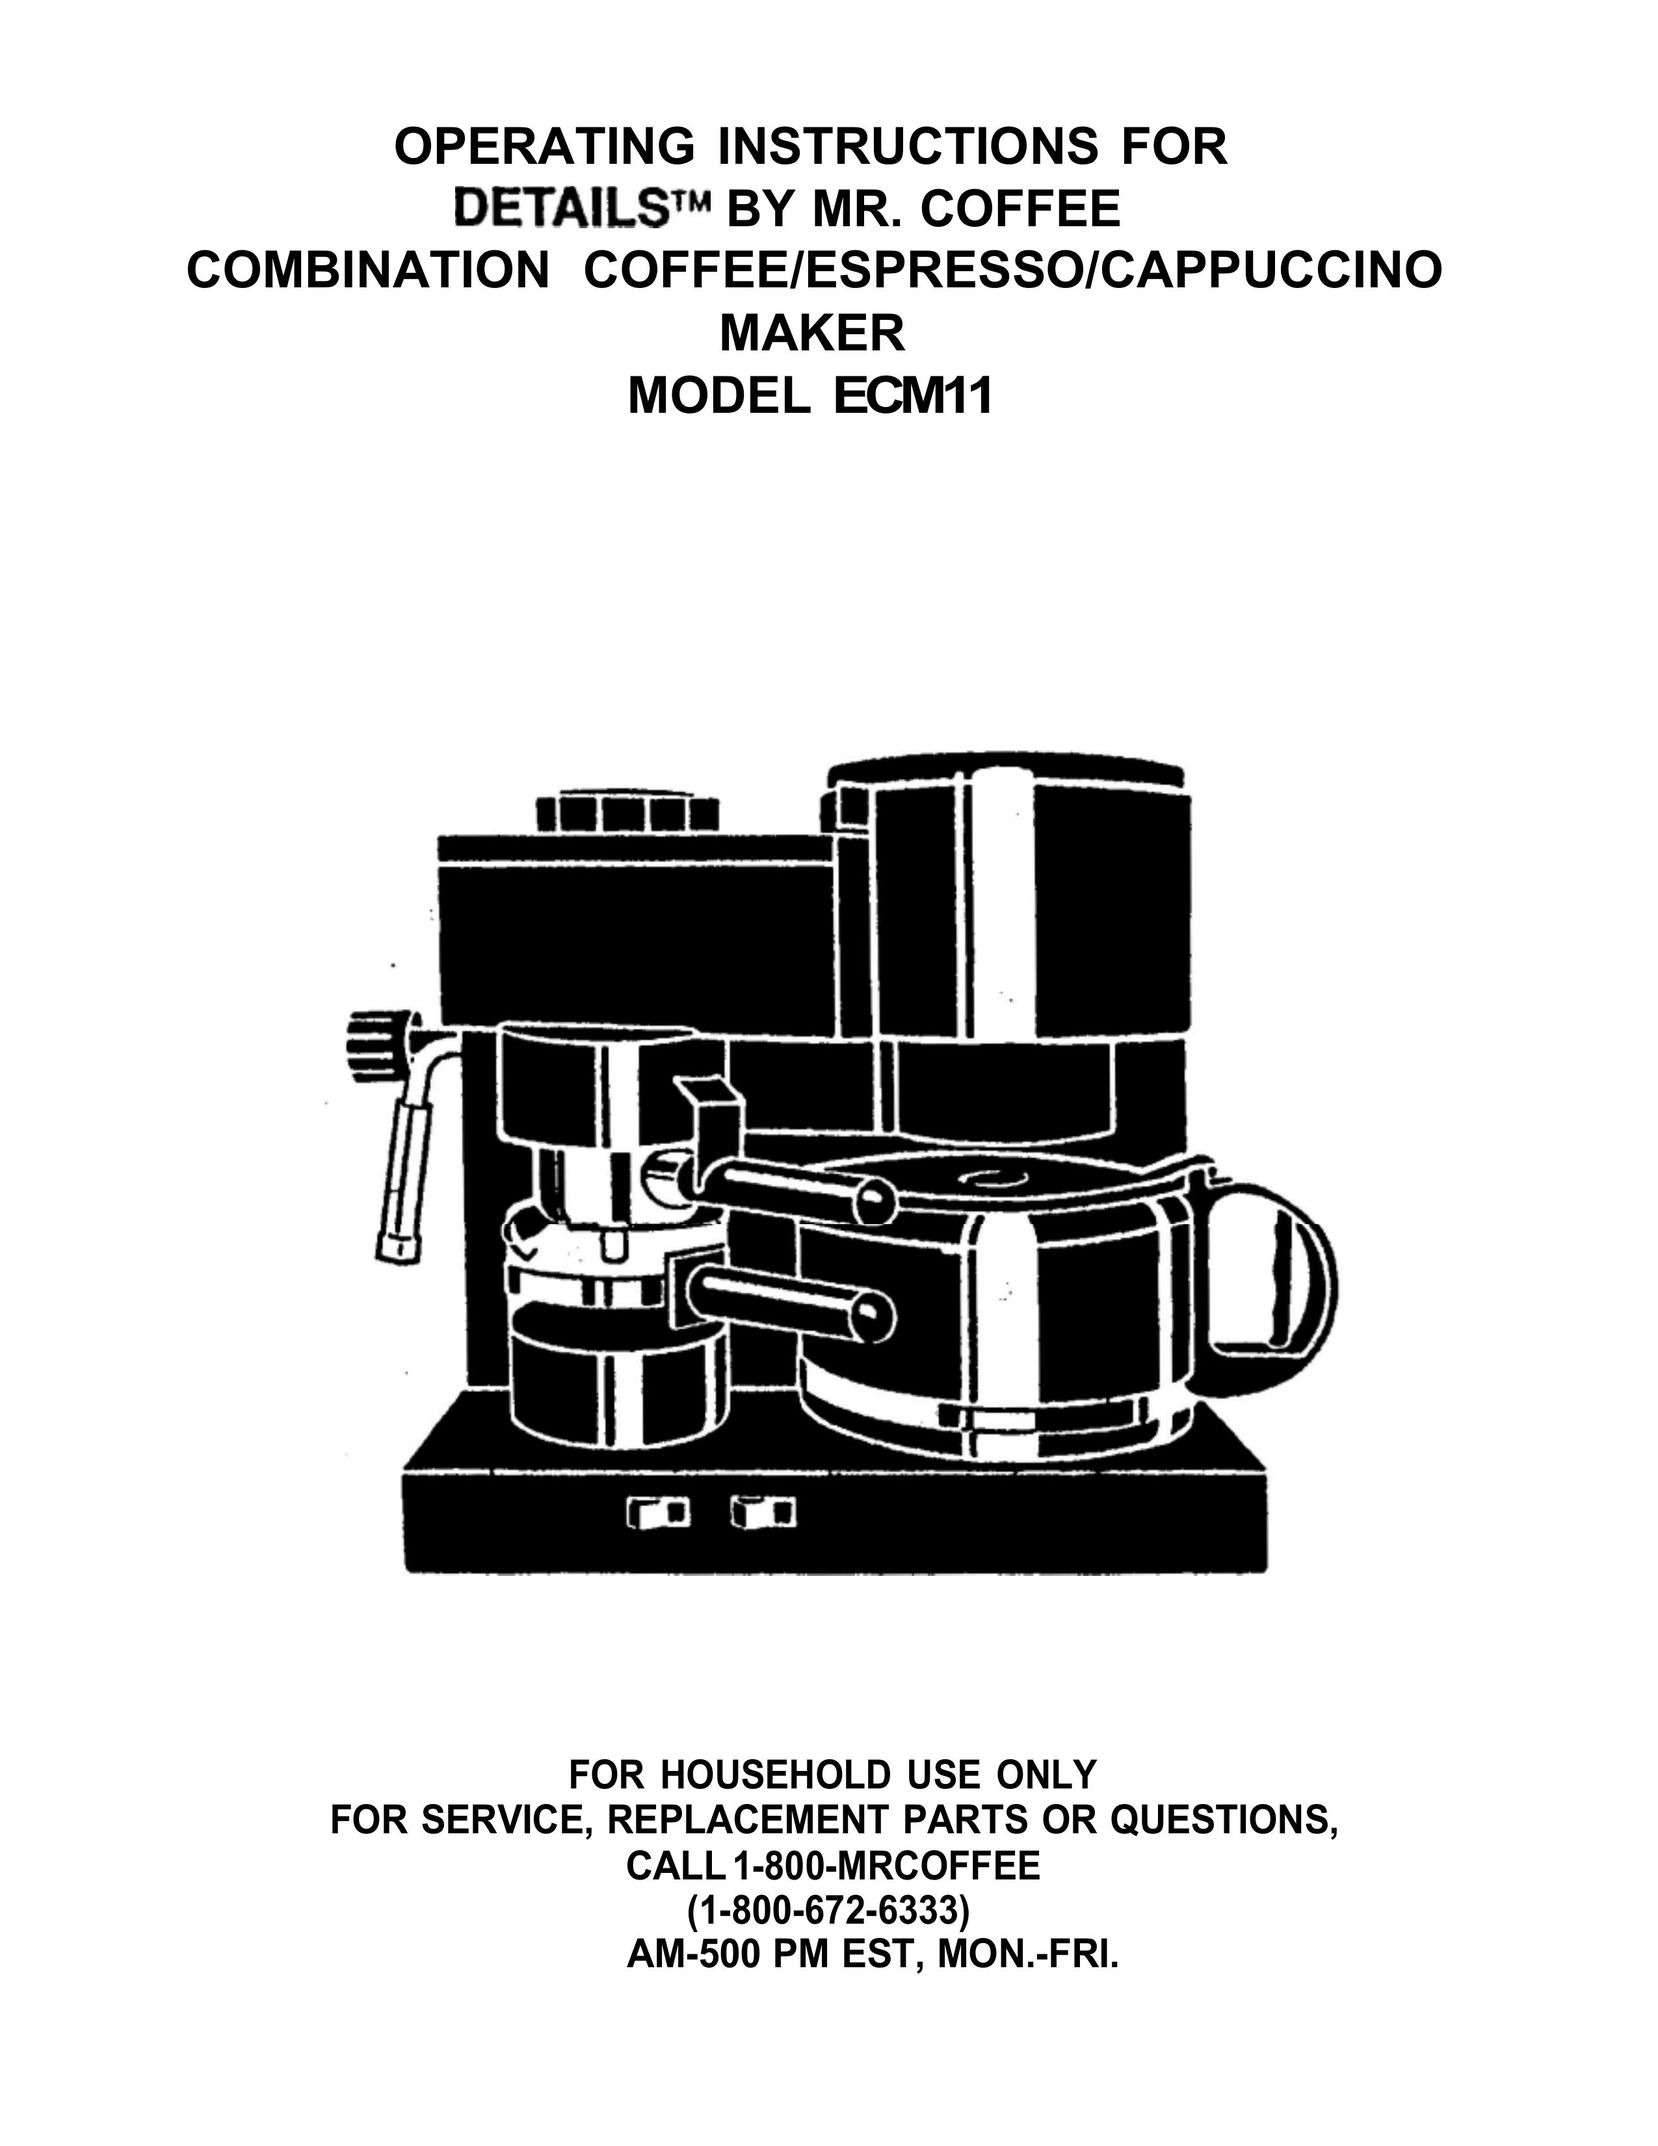 Mr. Coffee ECM11 Espresso Maker User Manual